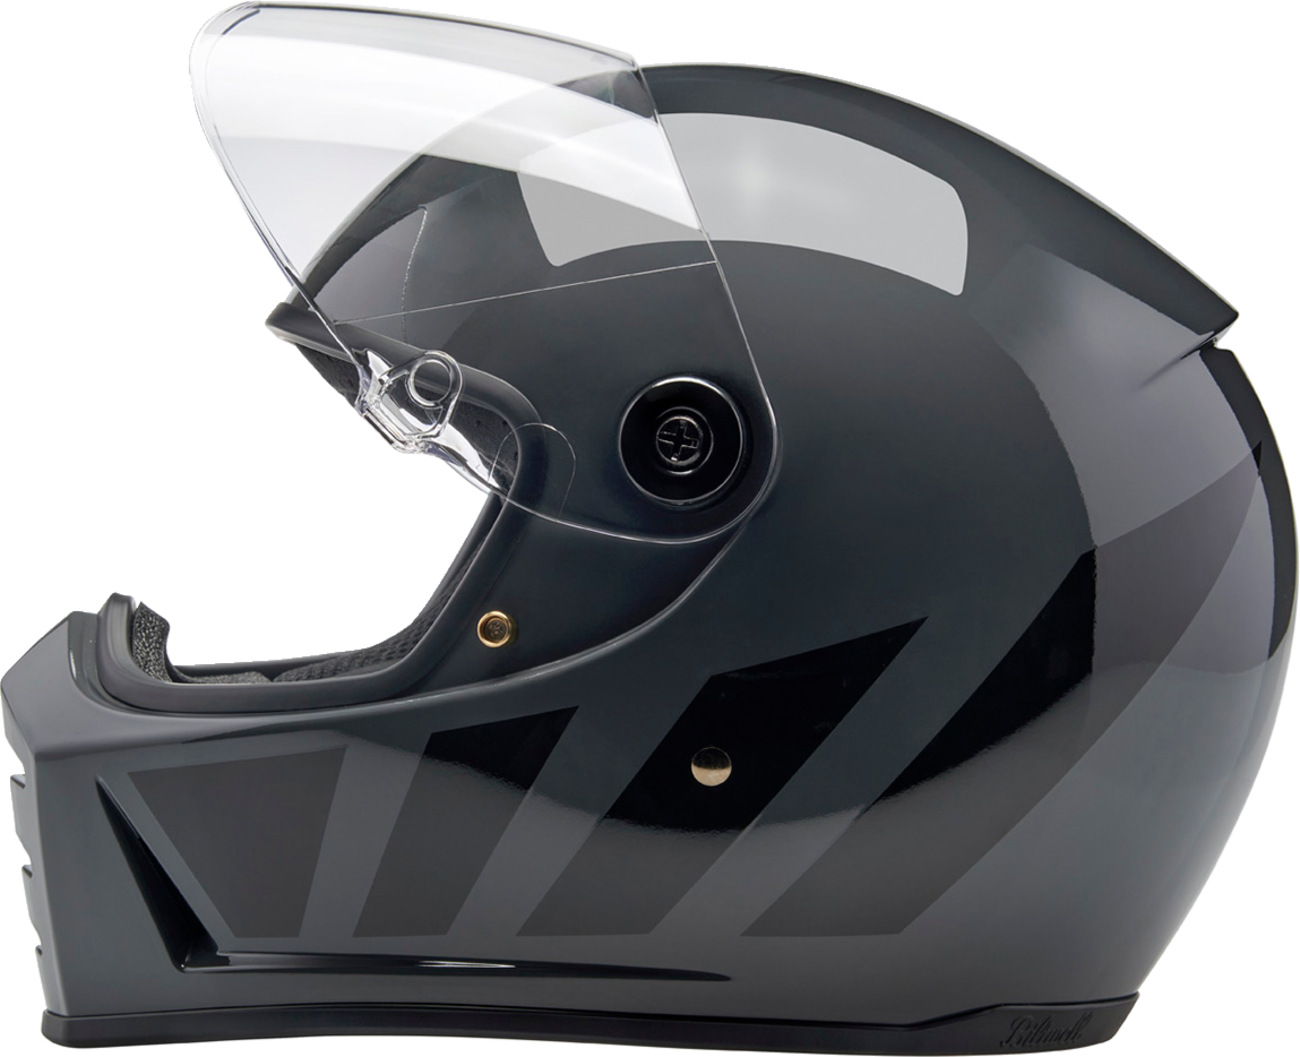 BILTWELL Lane Splitter Helmet - Storm Gray Inertia - Large 1004-569-504